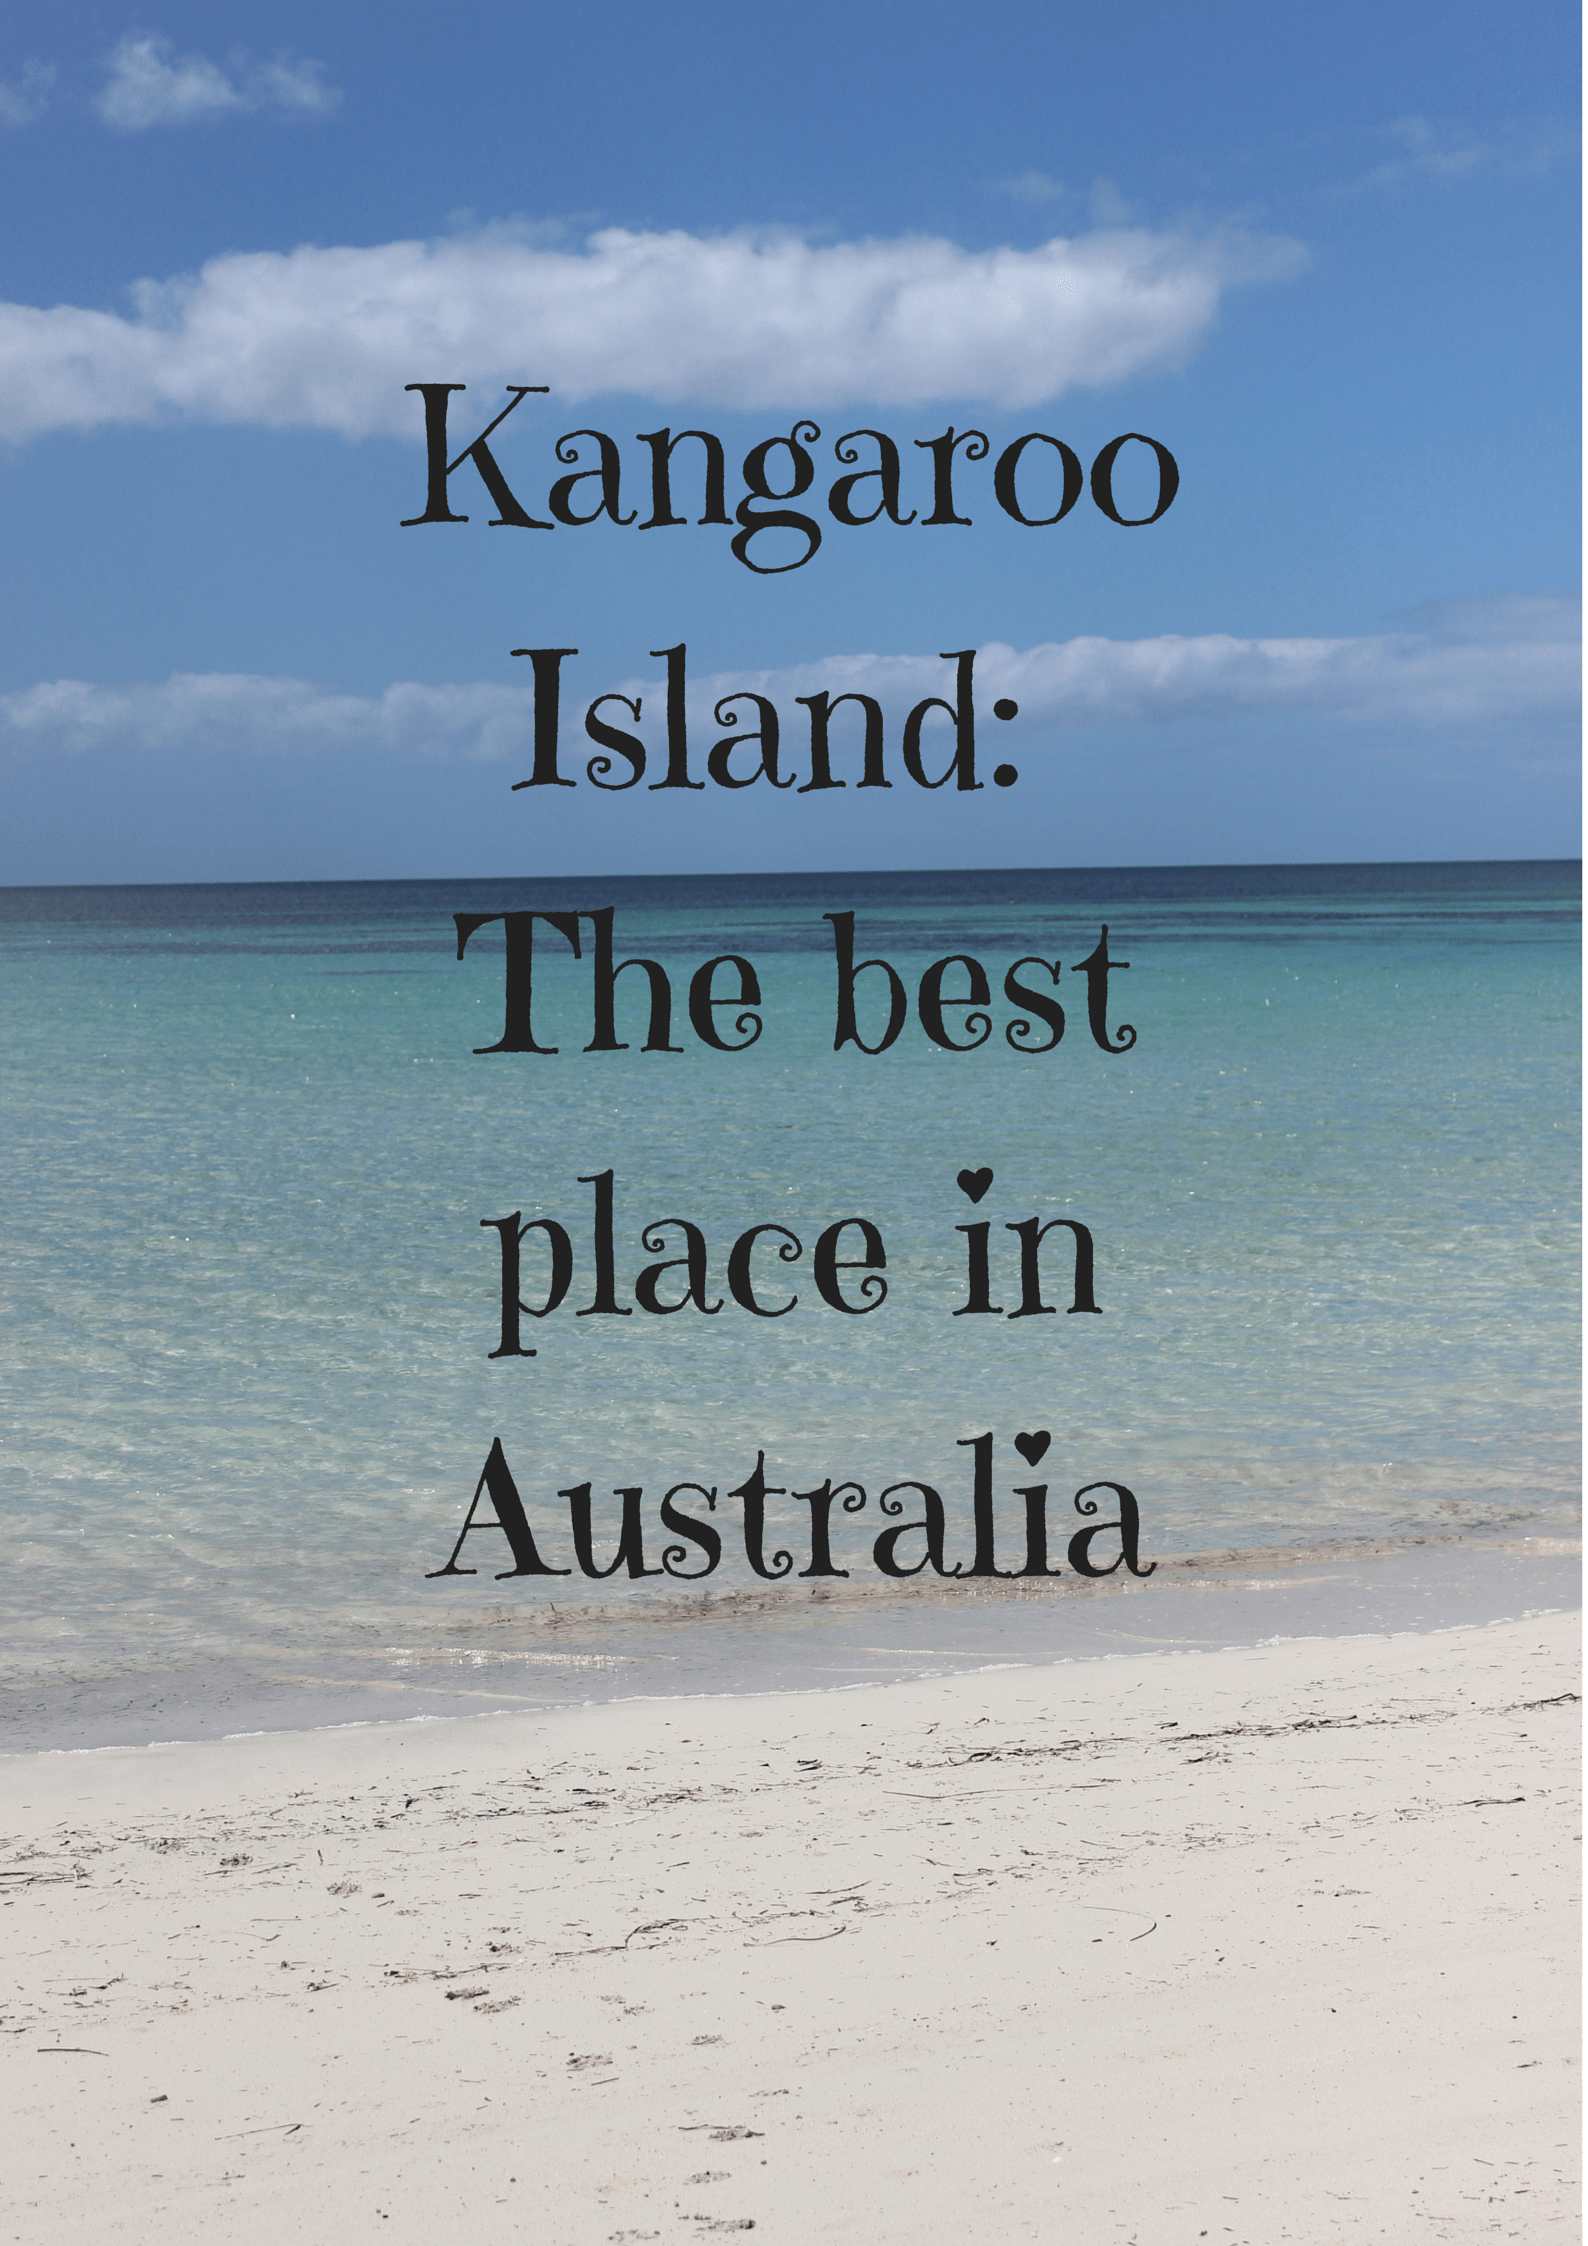 Kangaroo Island_ The best place in Australia